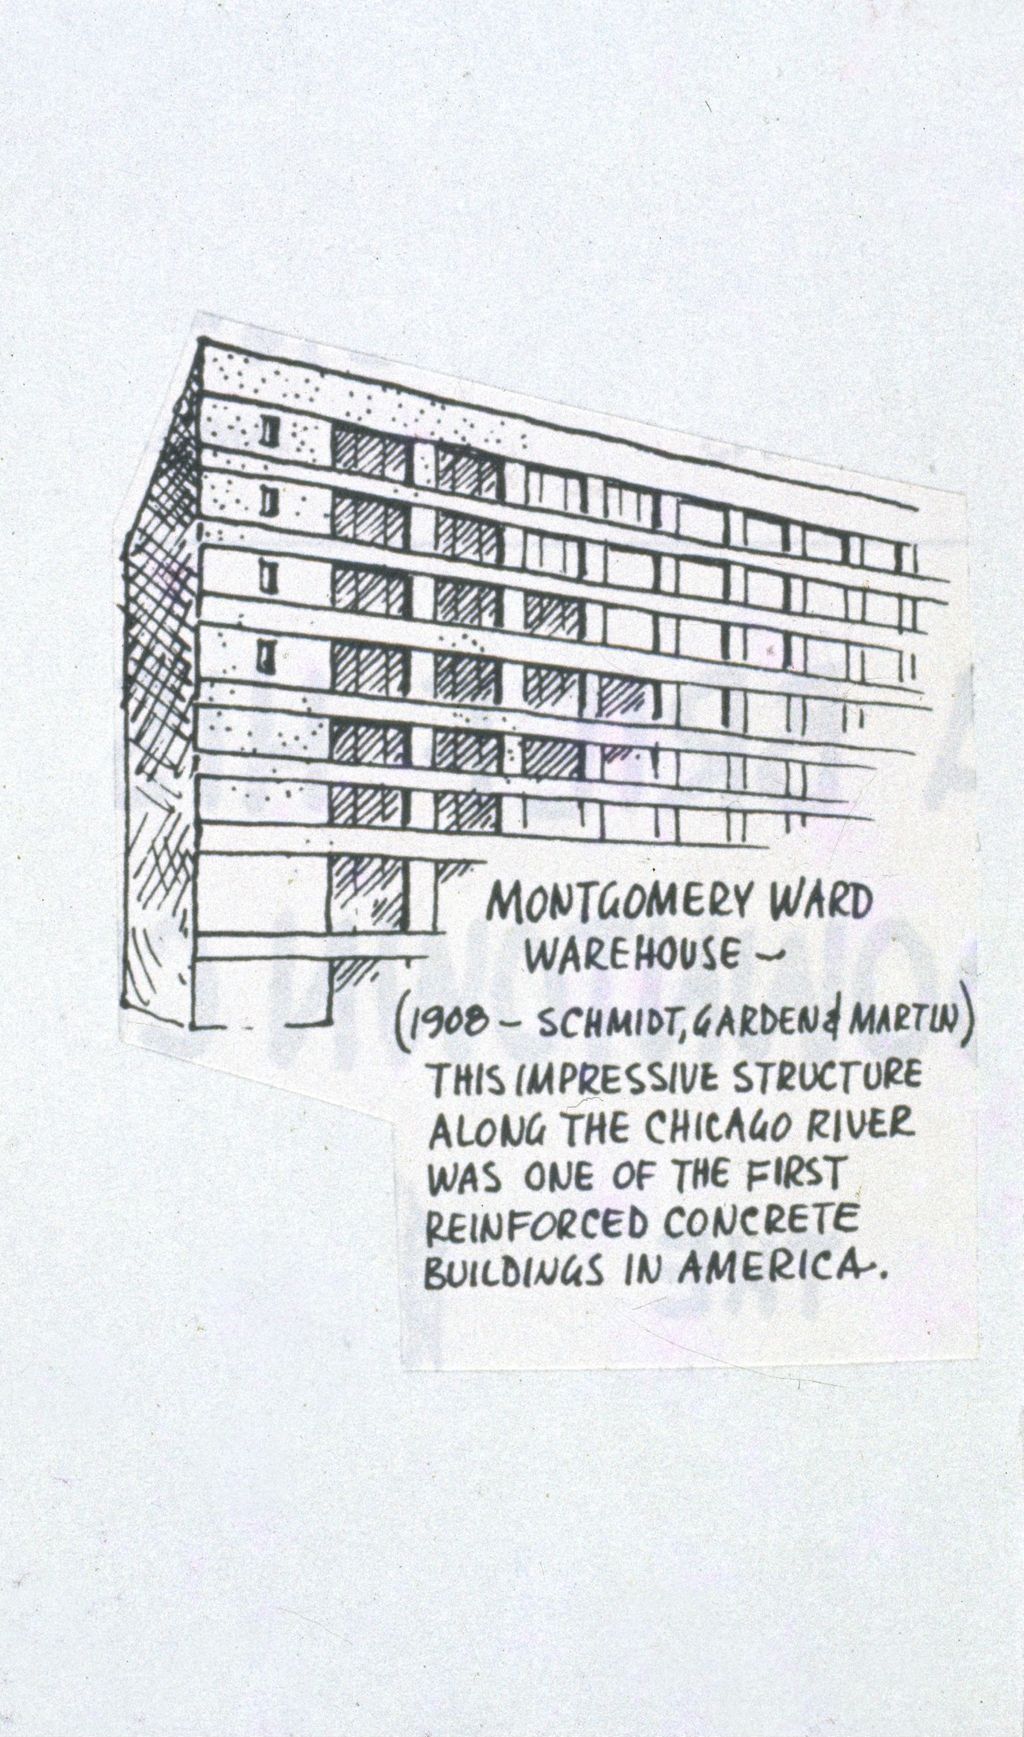 Miniature of Montgomery Ward Warehouse